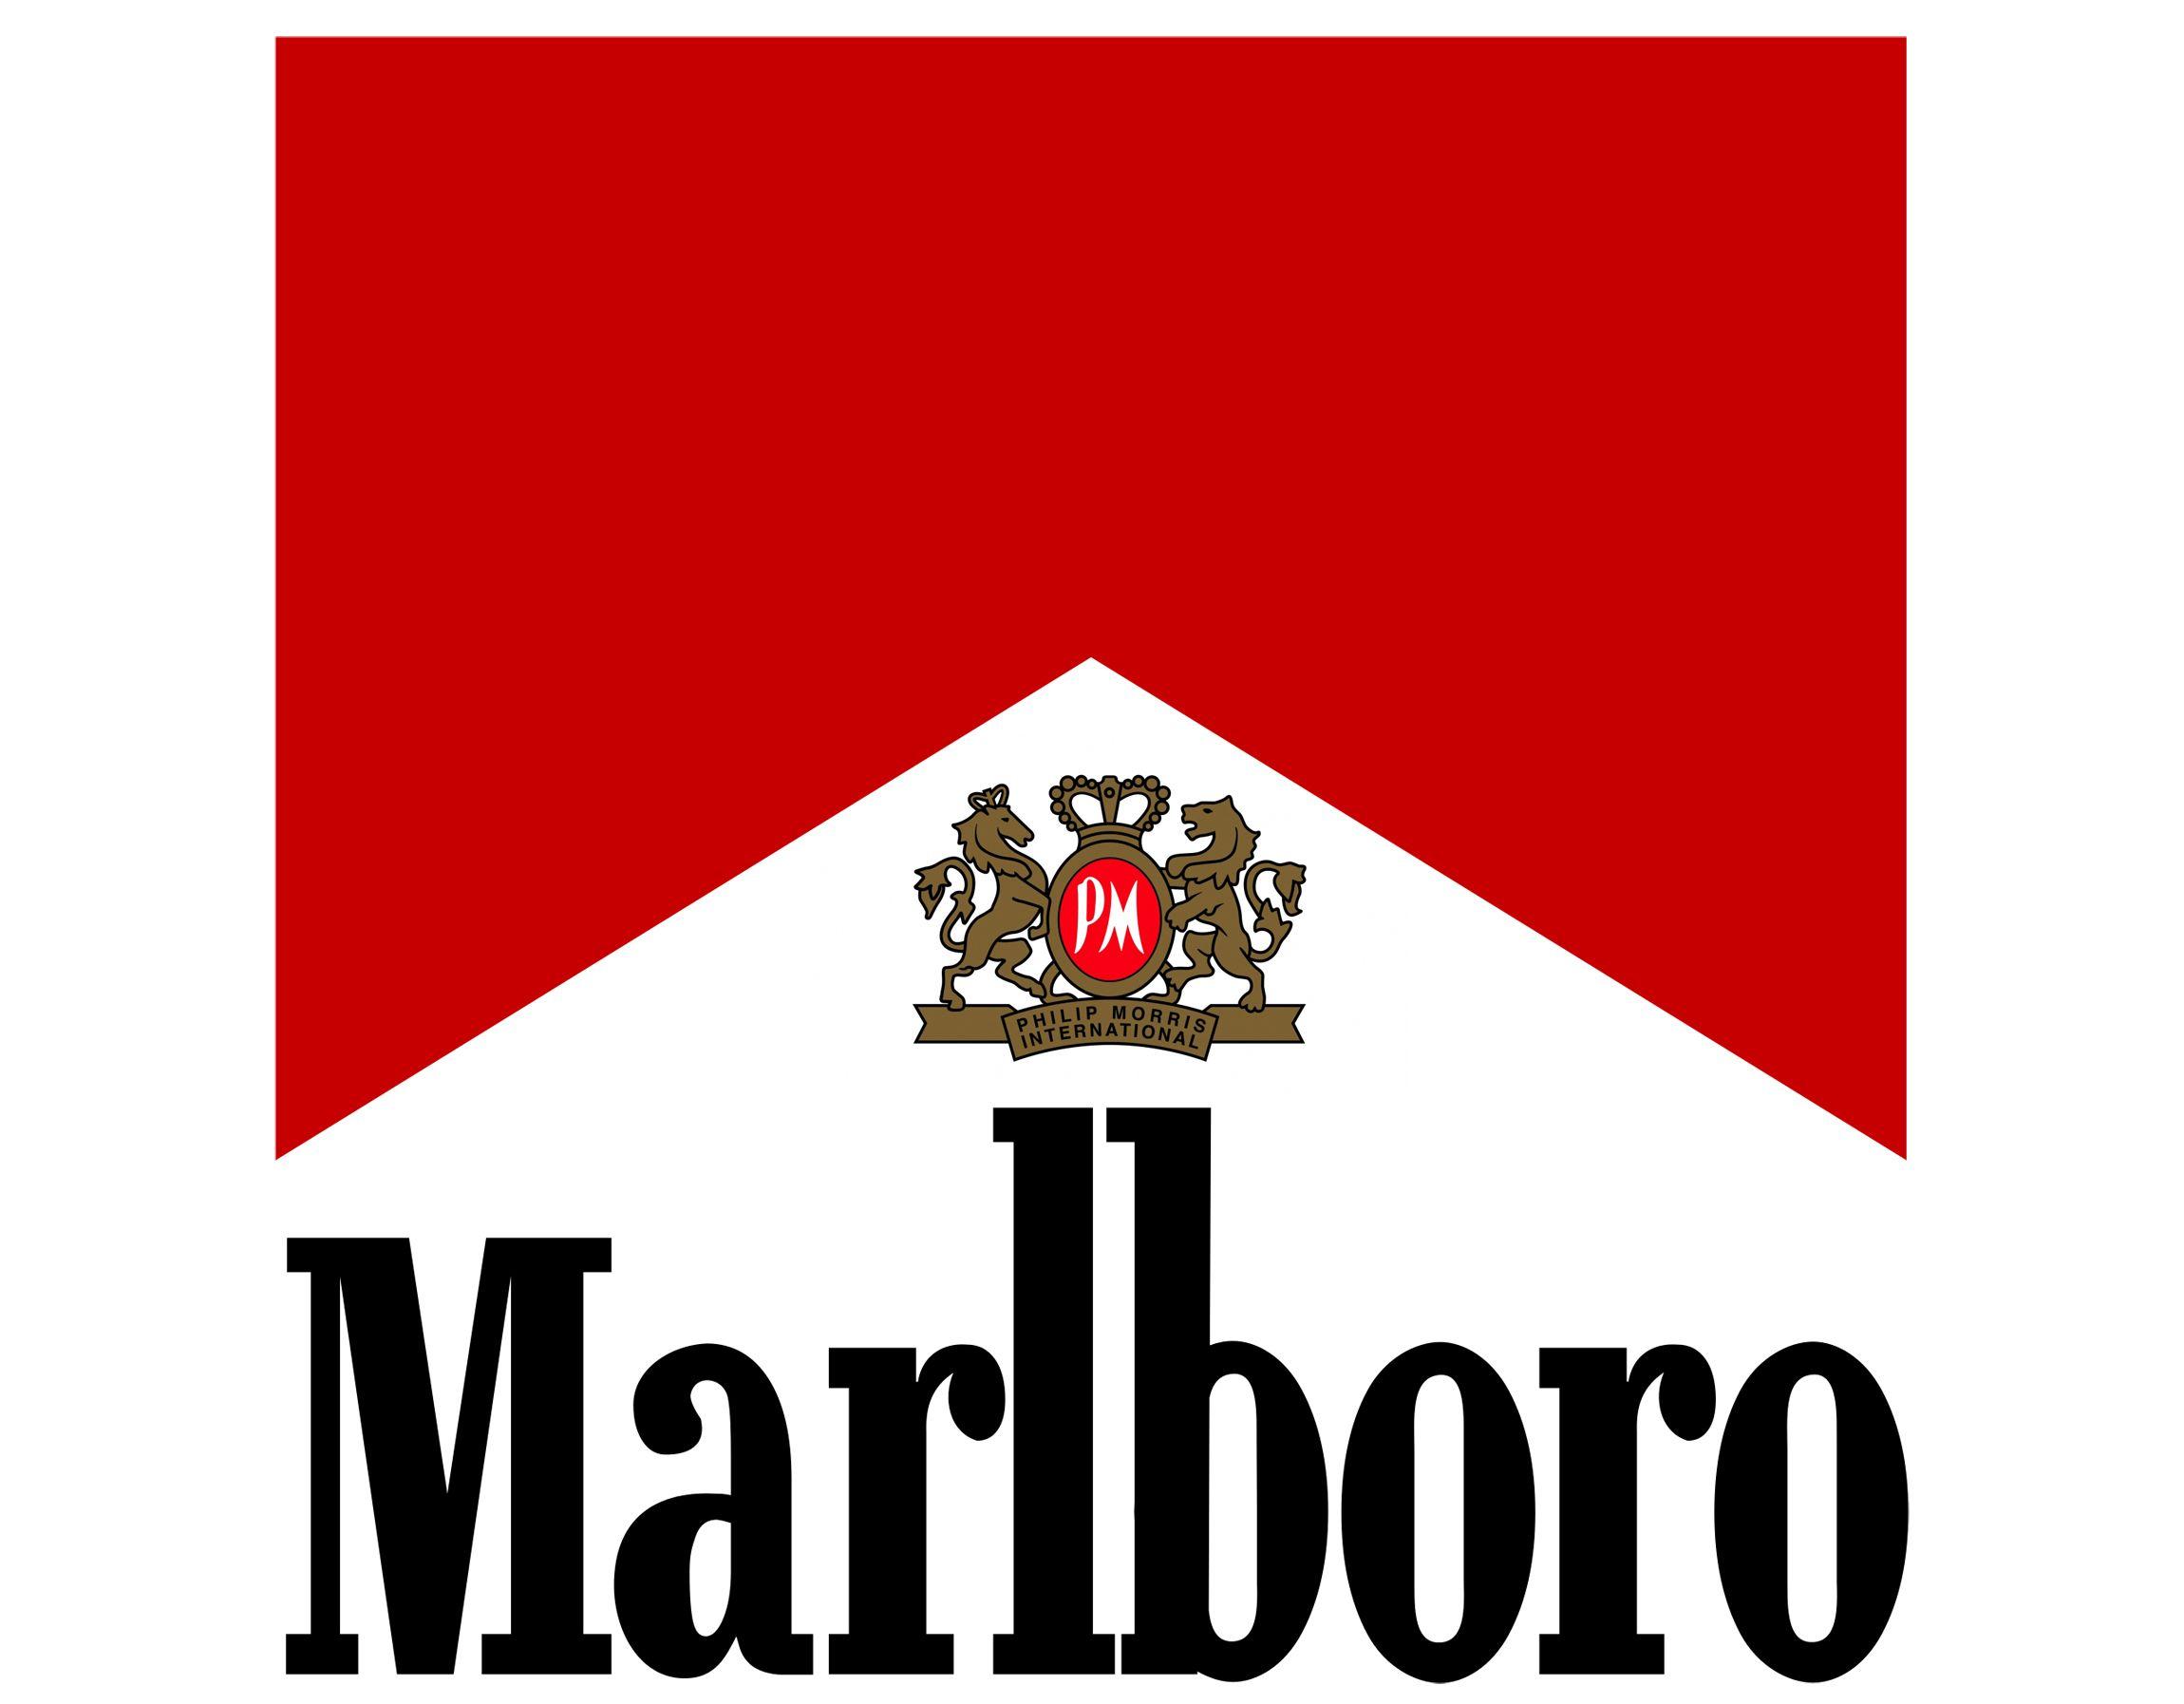 Maarlboro Logo - Meaning Marlboro logo and symbol | history and evolution